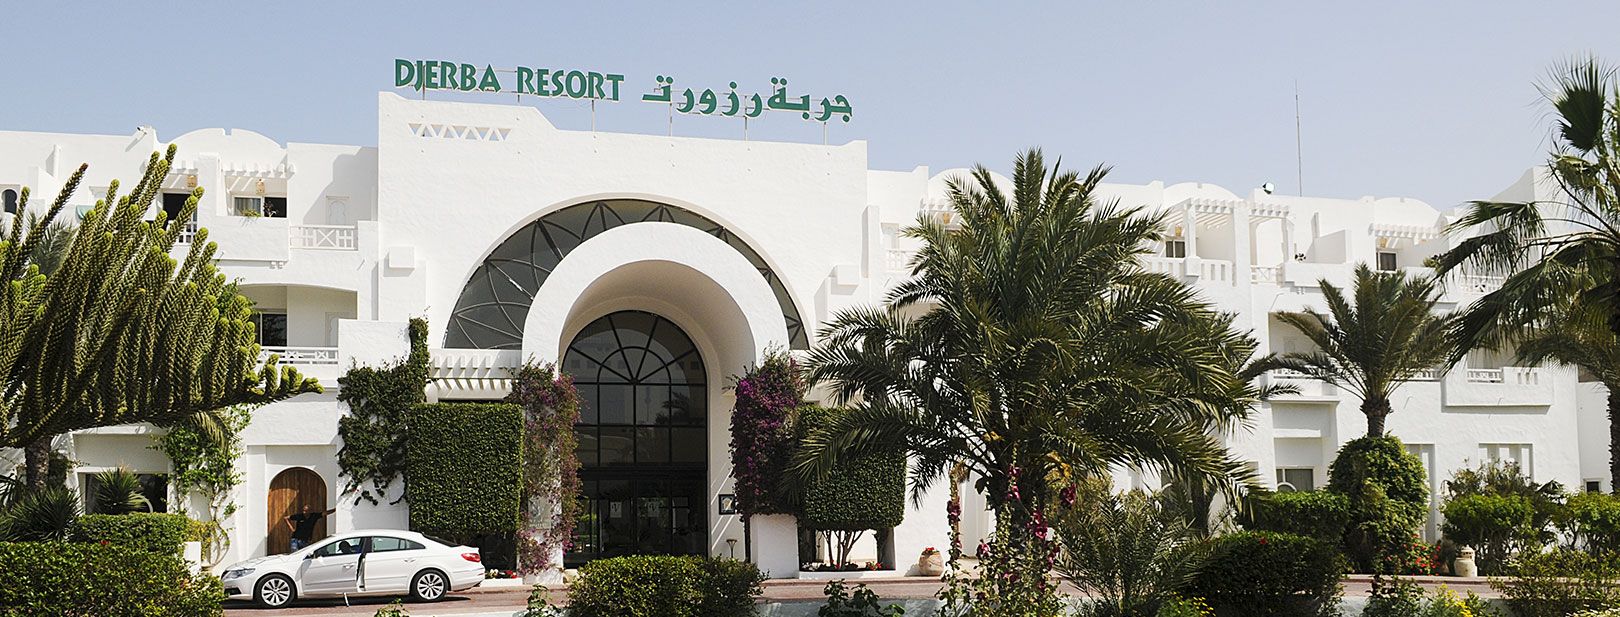 Hôtel Djerba Resort 4* pas cher photo 2